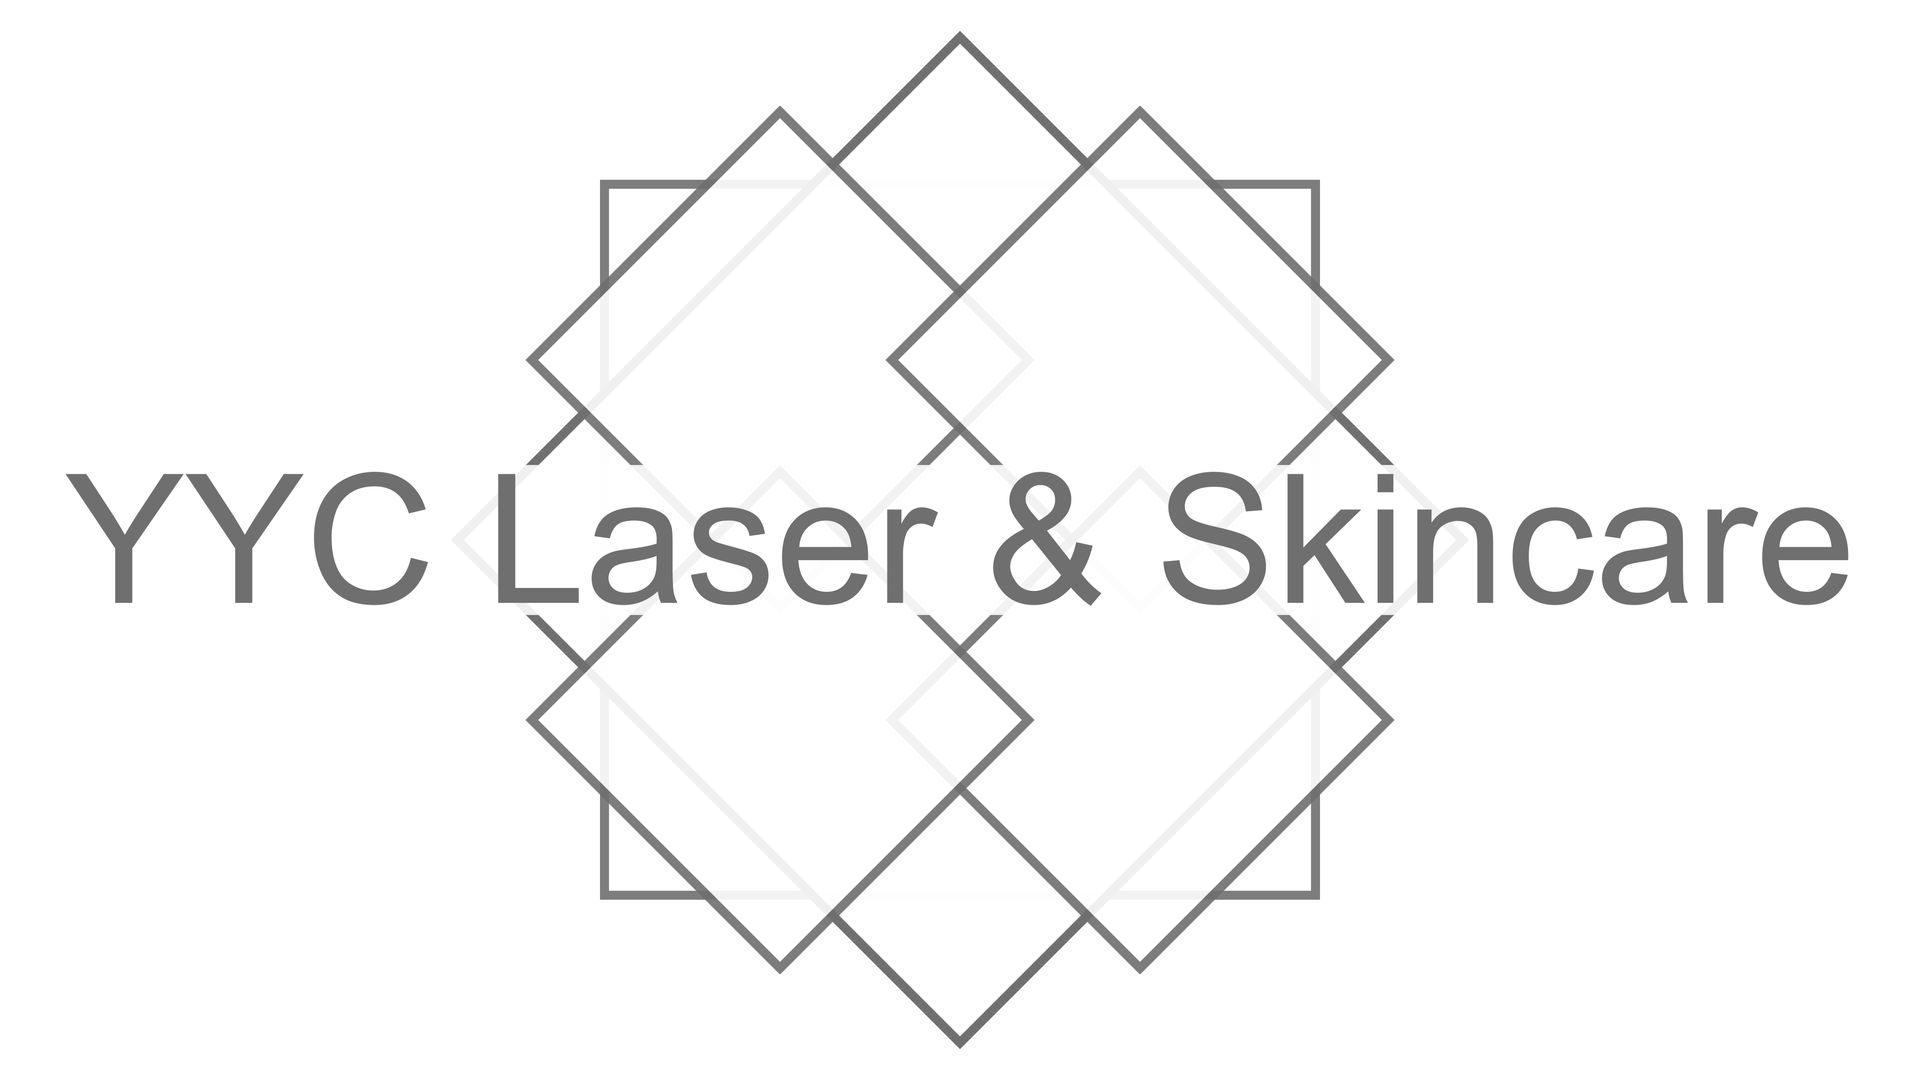 yyc laser & skincare logo